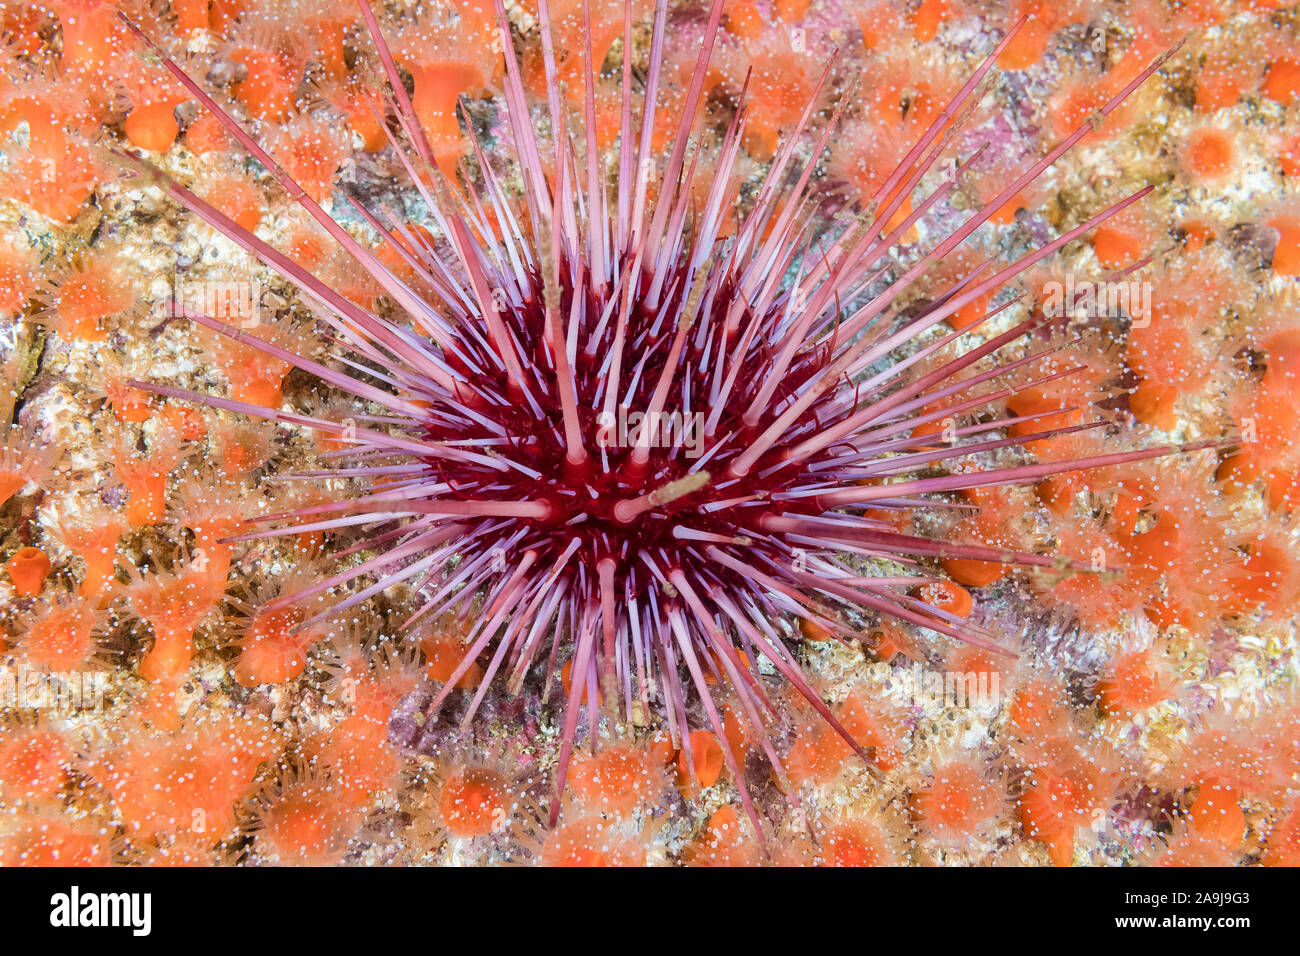 Red sea urchin, Mesocentrotus franciscanus, Erdbeere, anmone Corynactis californica, Barkley Sound, Vancouver Island, British Columbia, Kanada, Paci Stockfoto